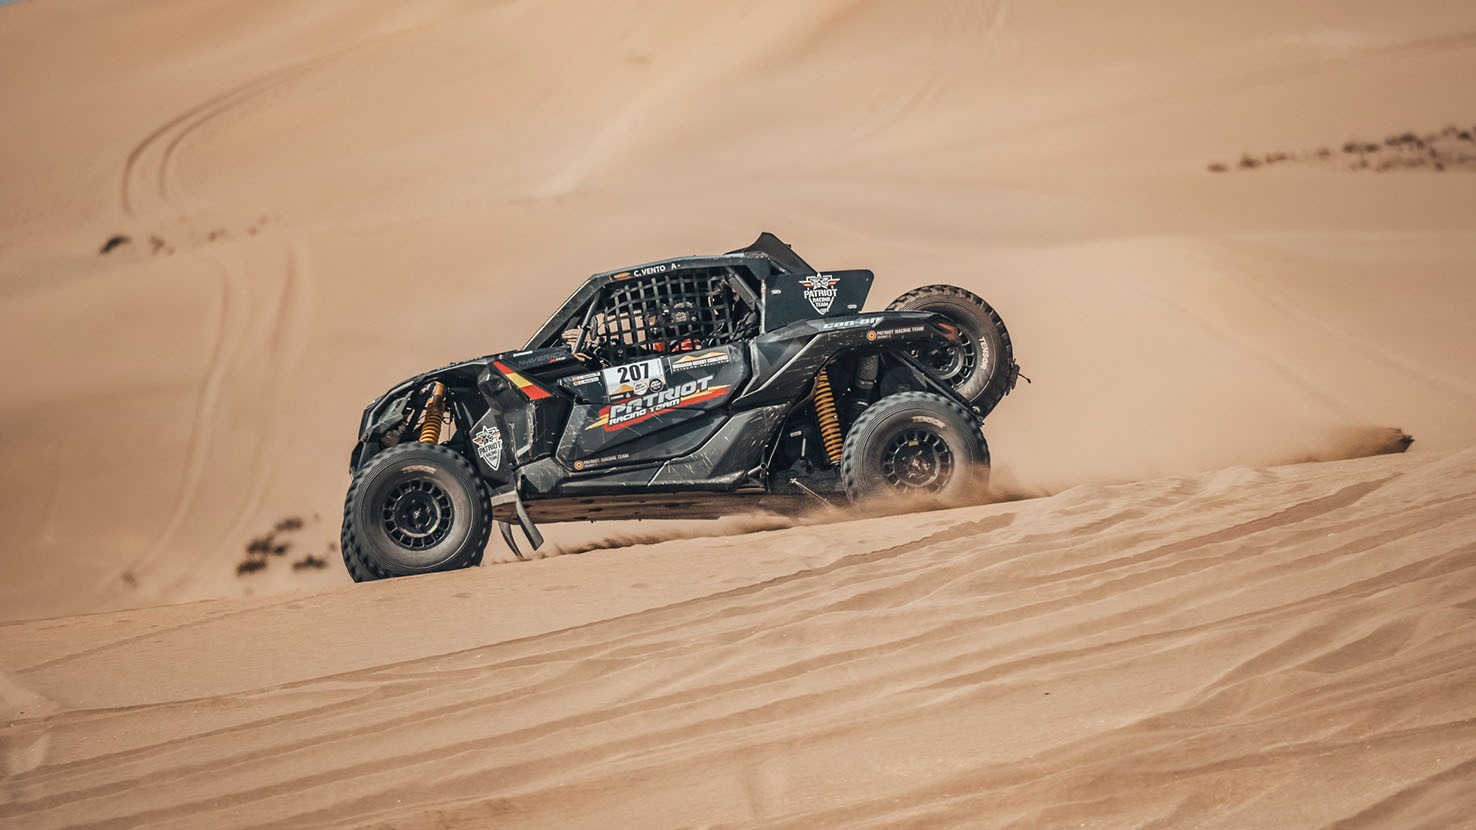 Equipo Patriot Racing Team Morocco Desert Challenge.